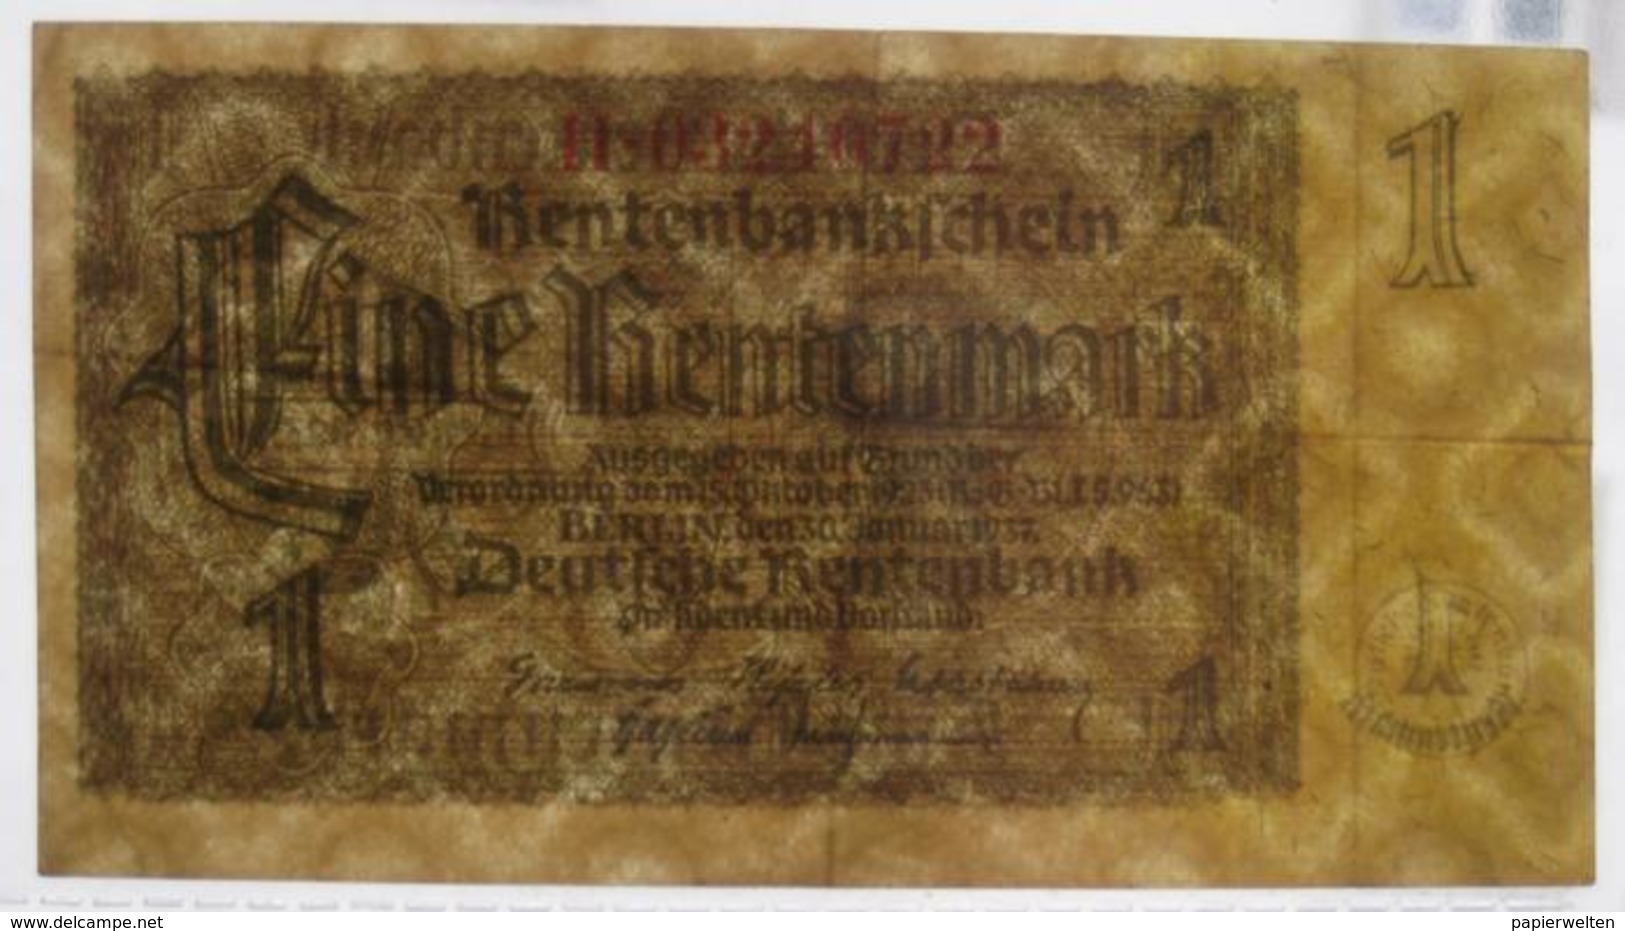 1 Rentenmark 1937 (WPM 173) 30.1.1937 - 1 Rentenmark